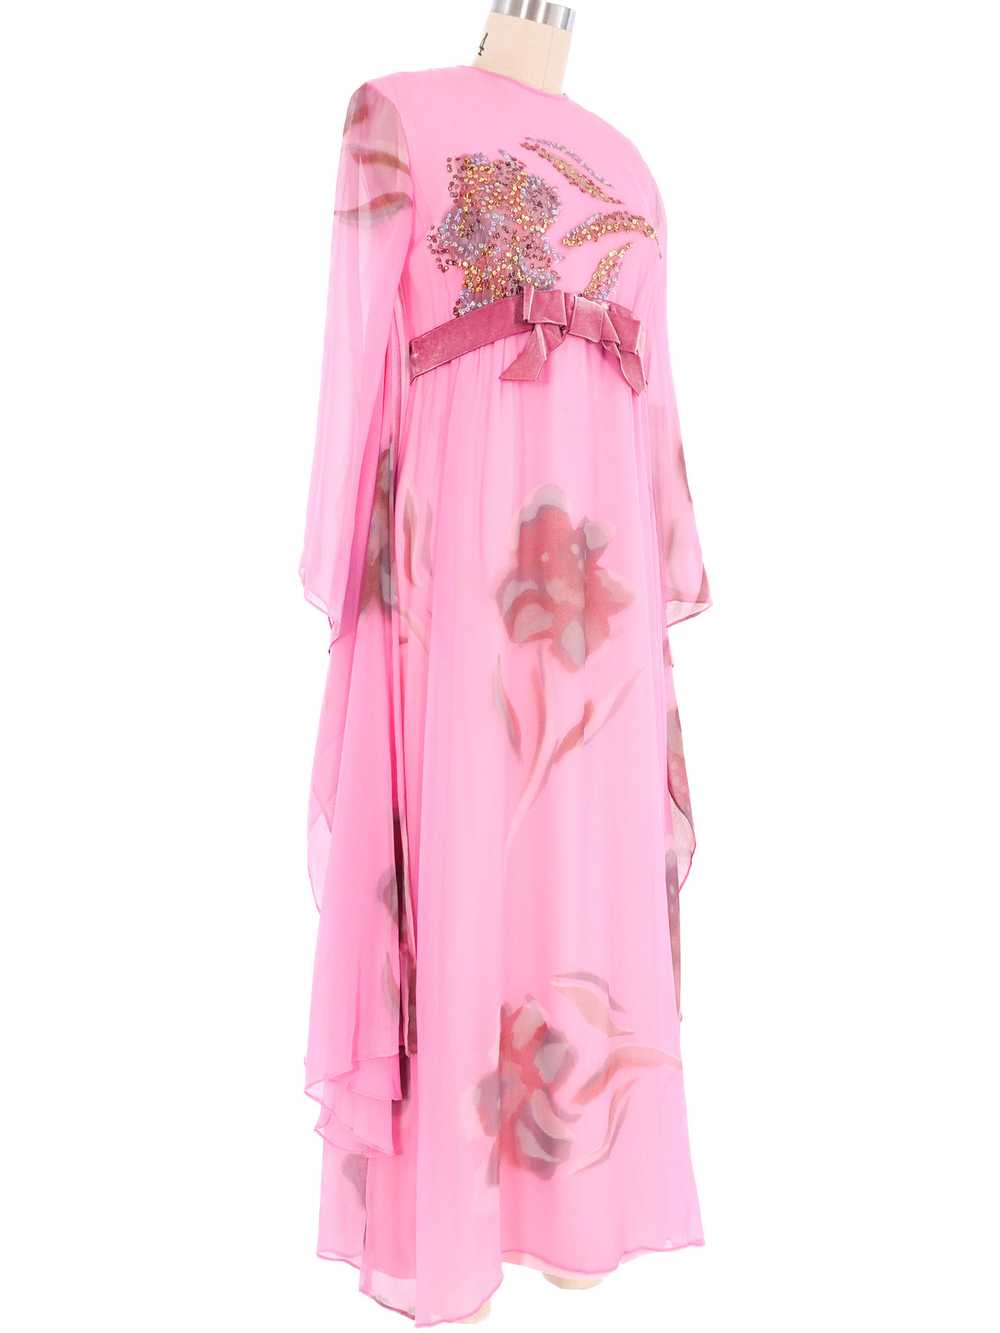 Emma Domb Hand Painted Kimono Sleeve Dress - image 5